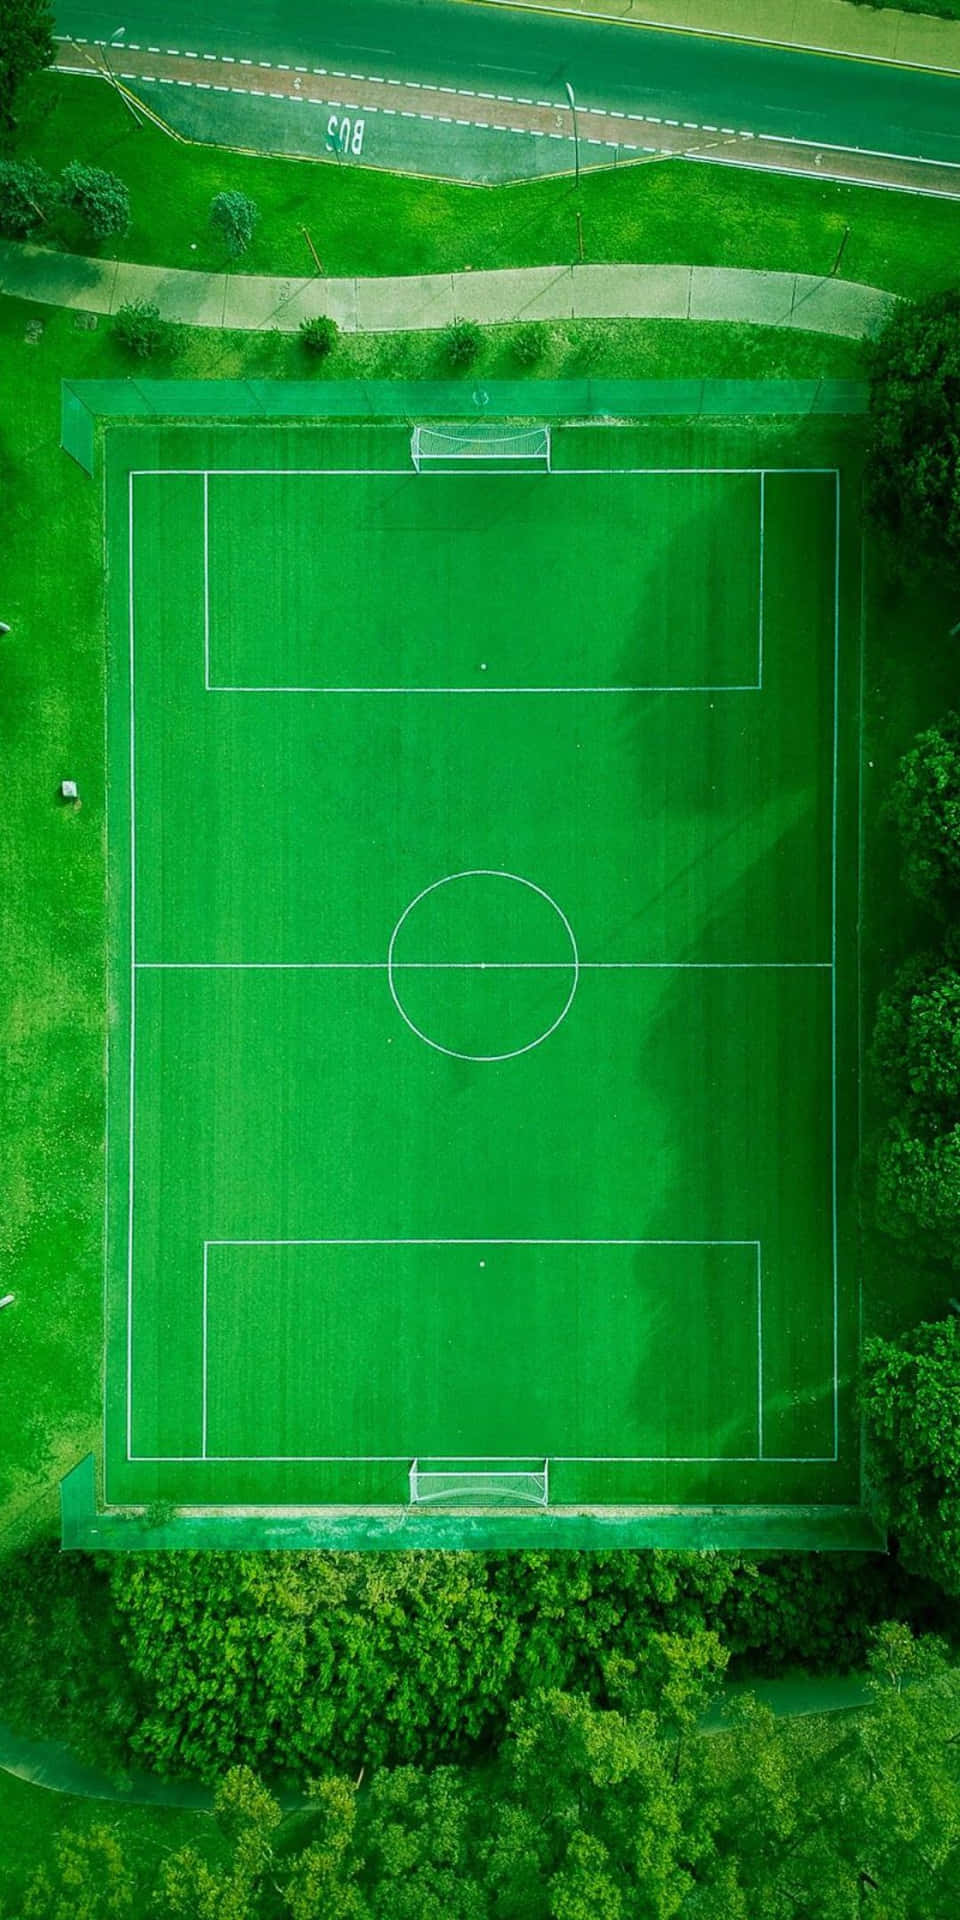 Pixel 3 Football Field Drone Shot Background